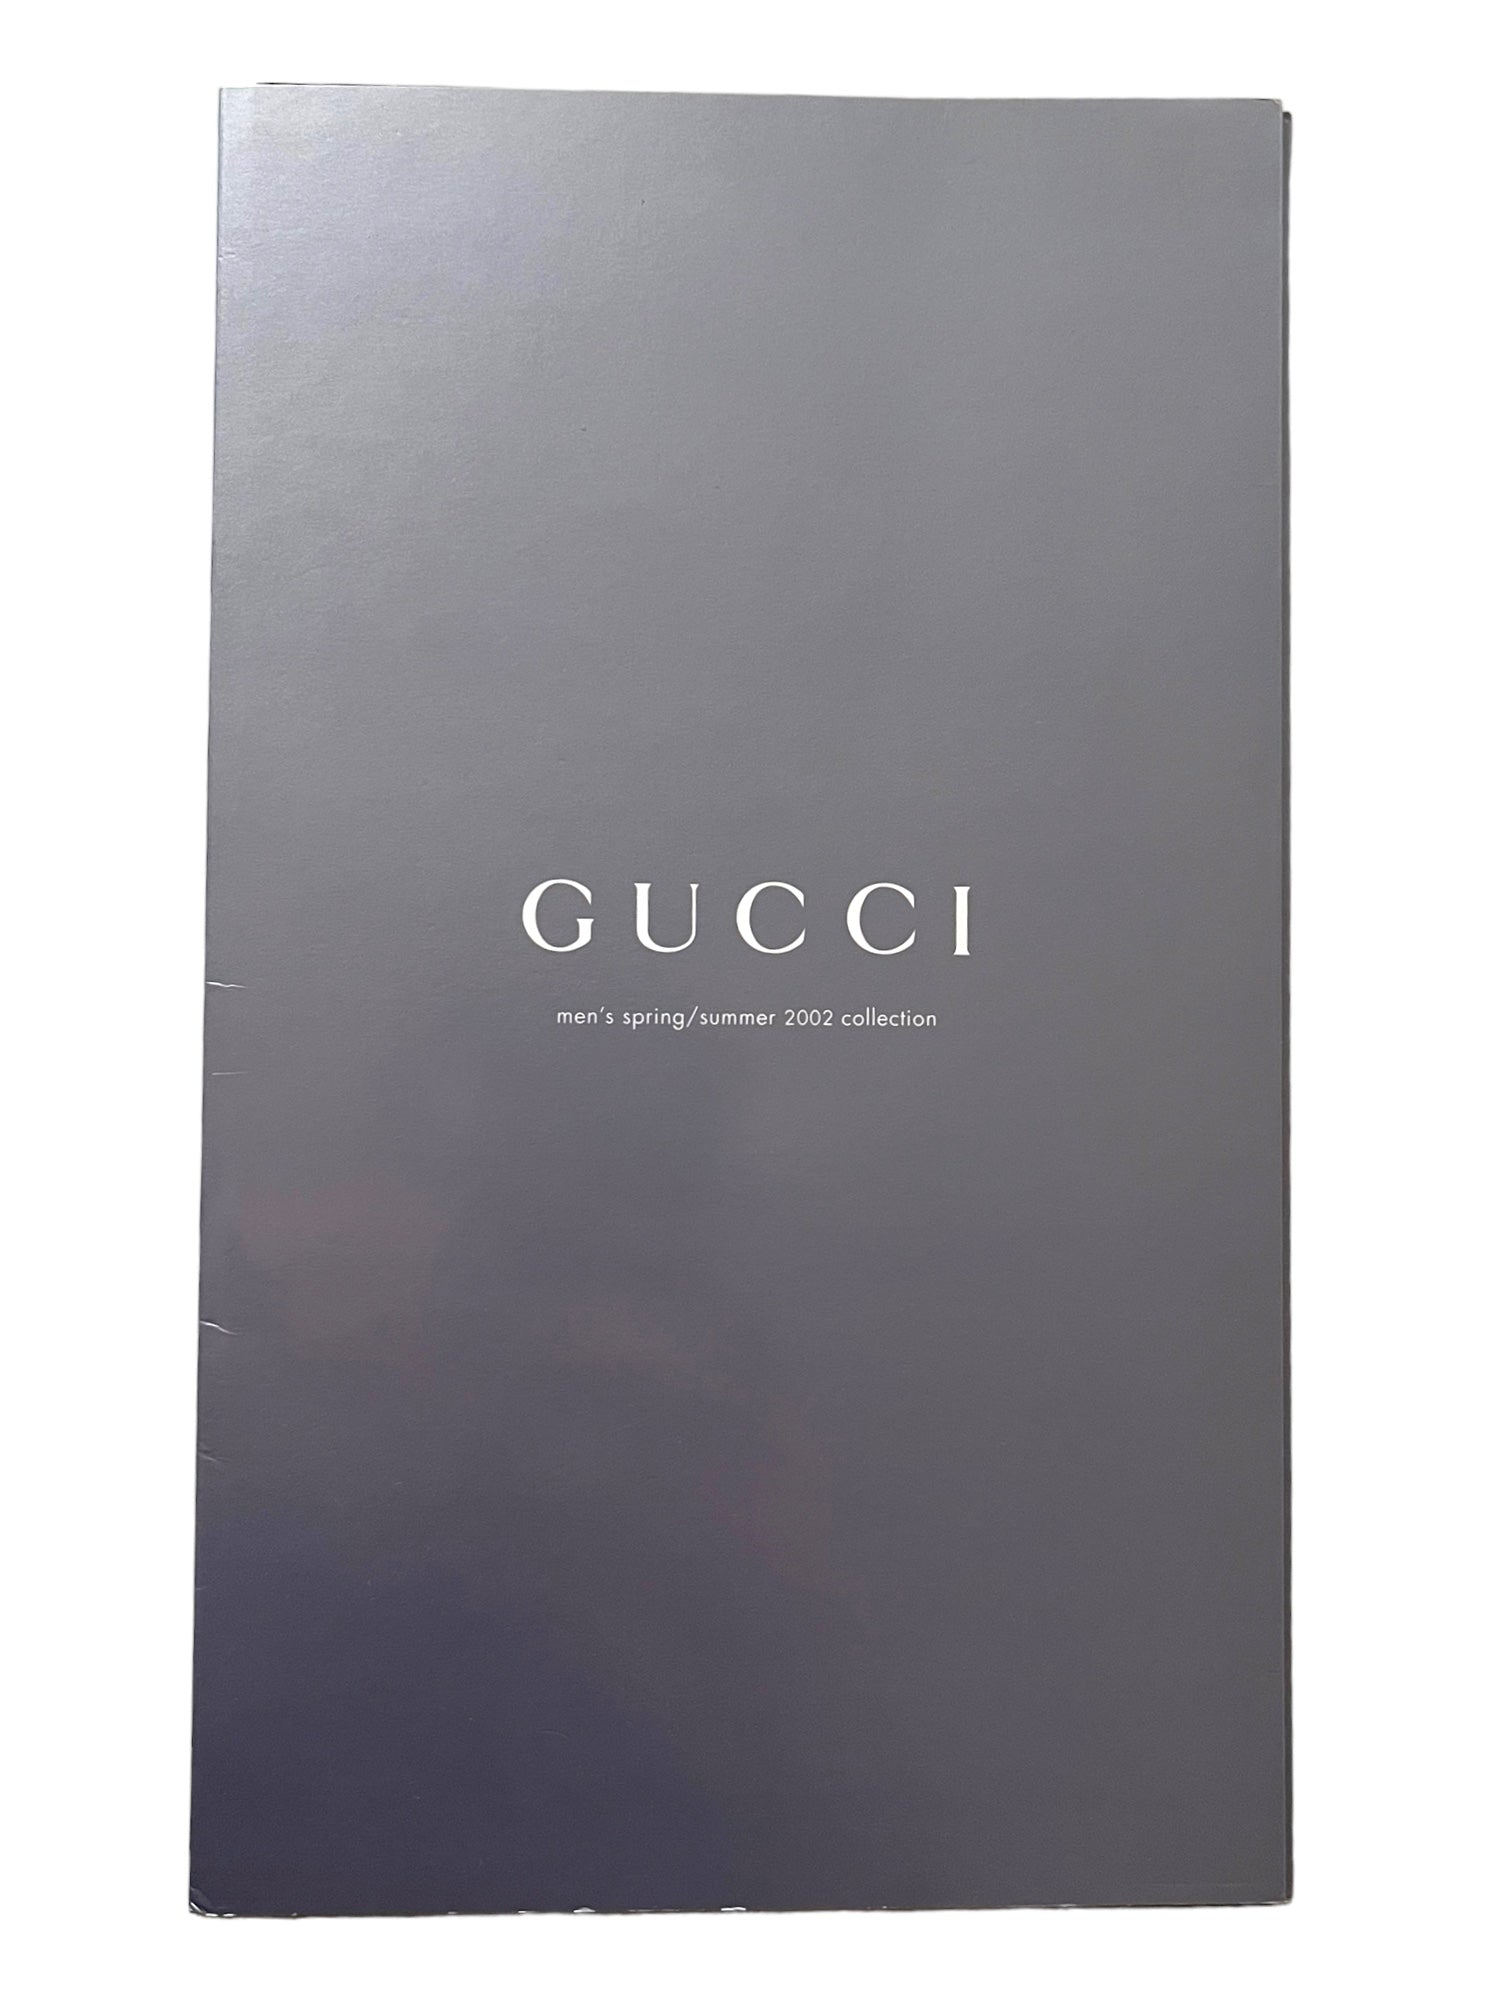 Gucci Men’s S/S02